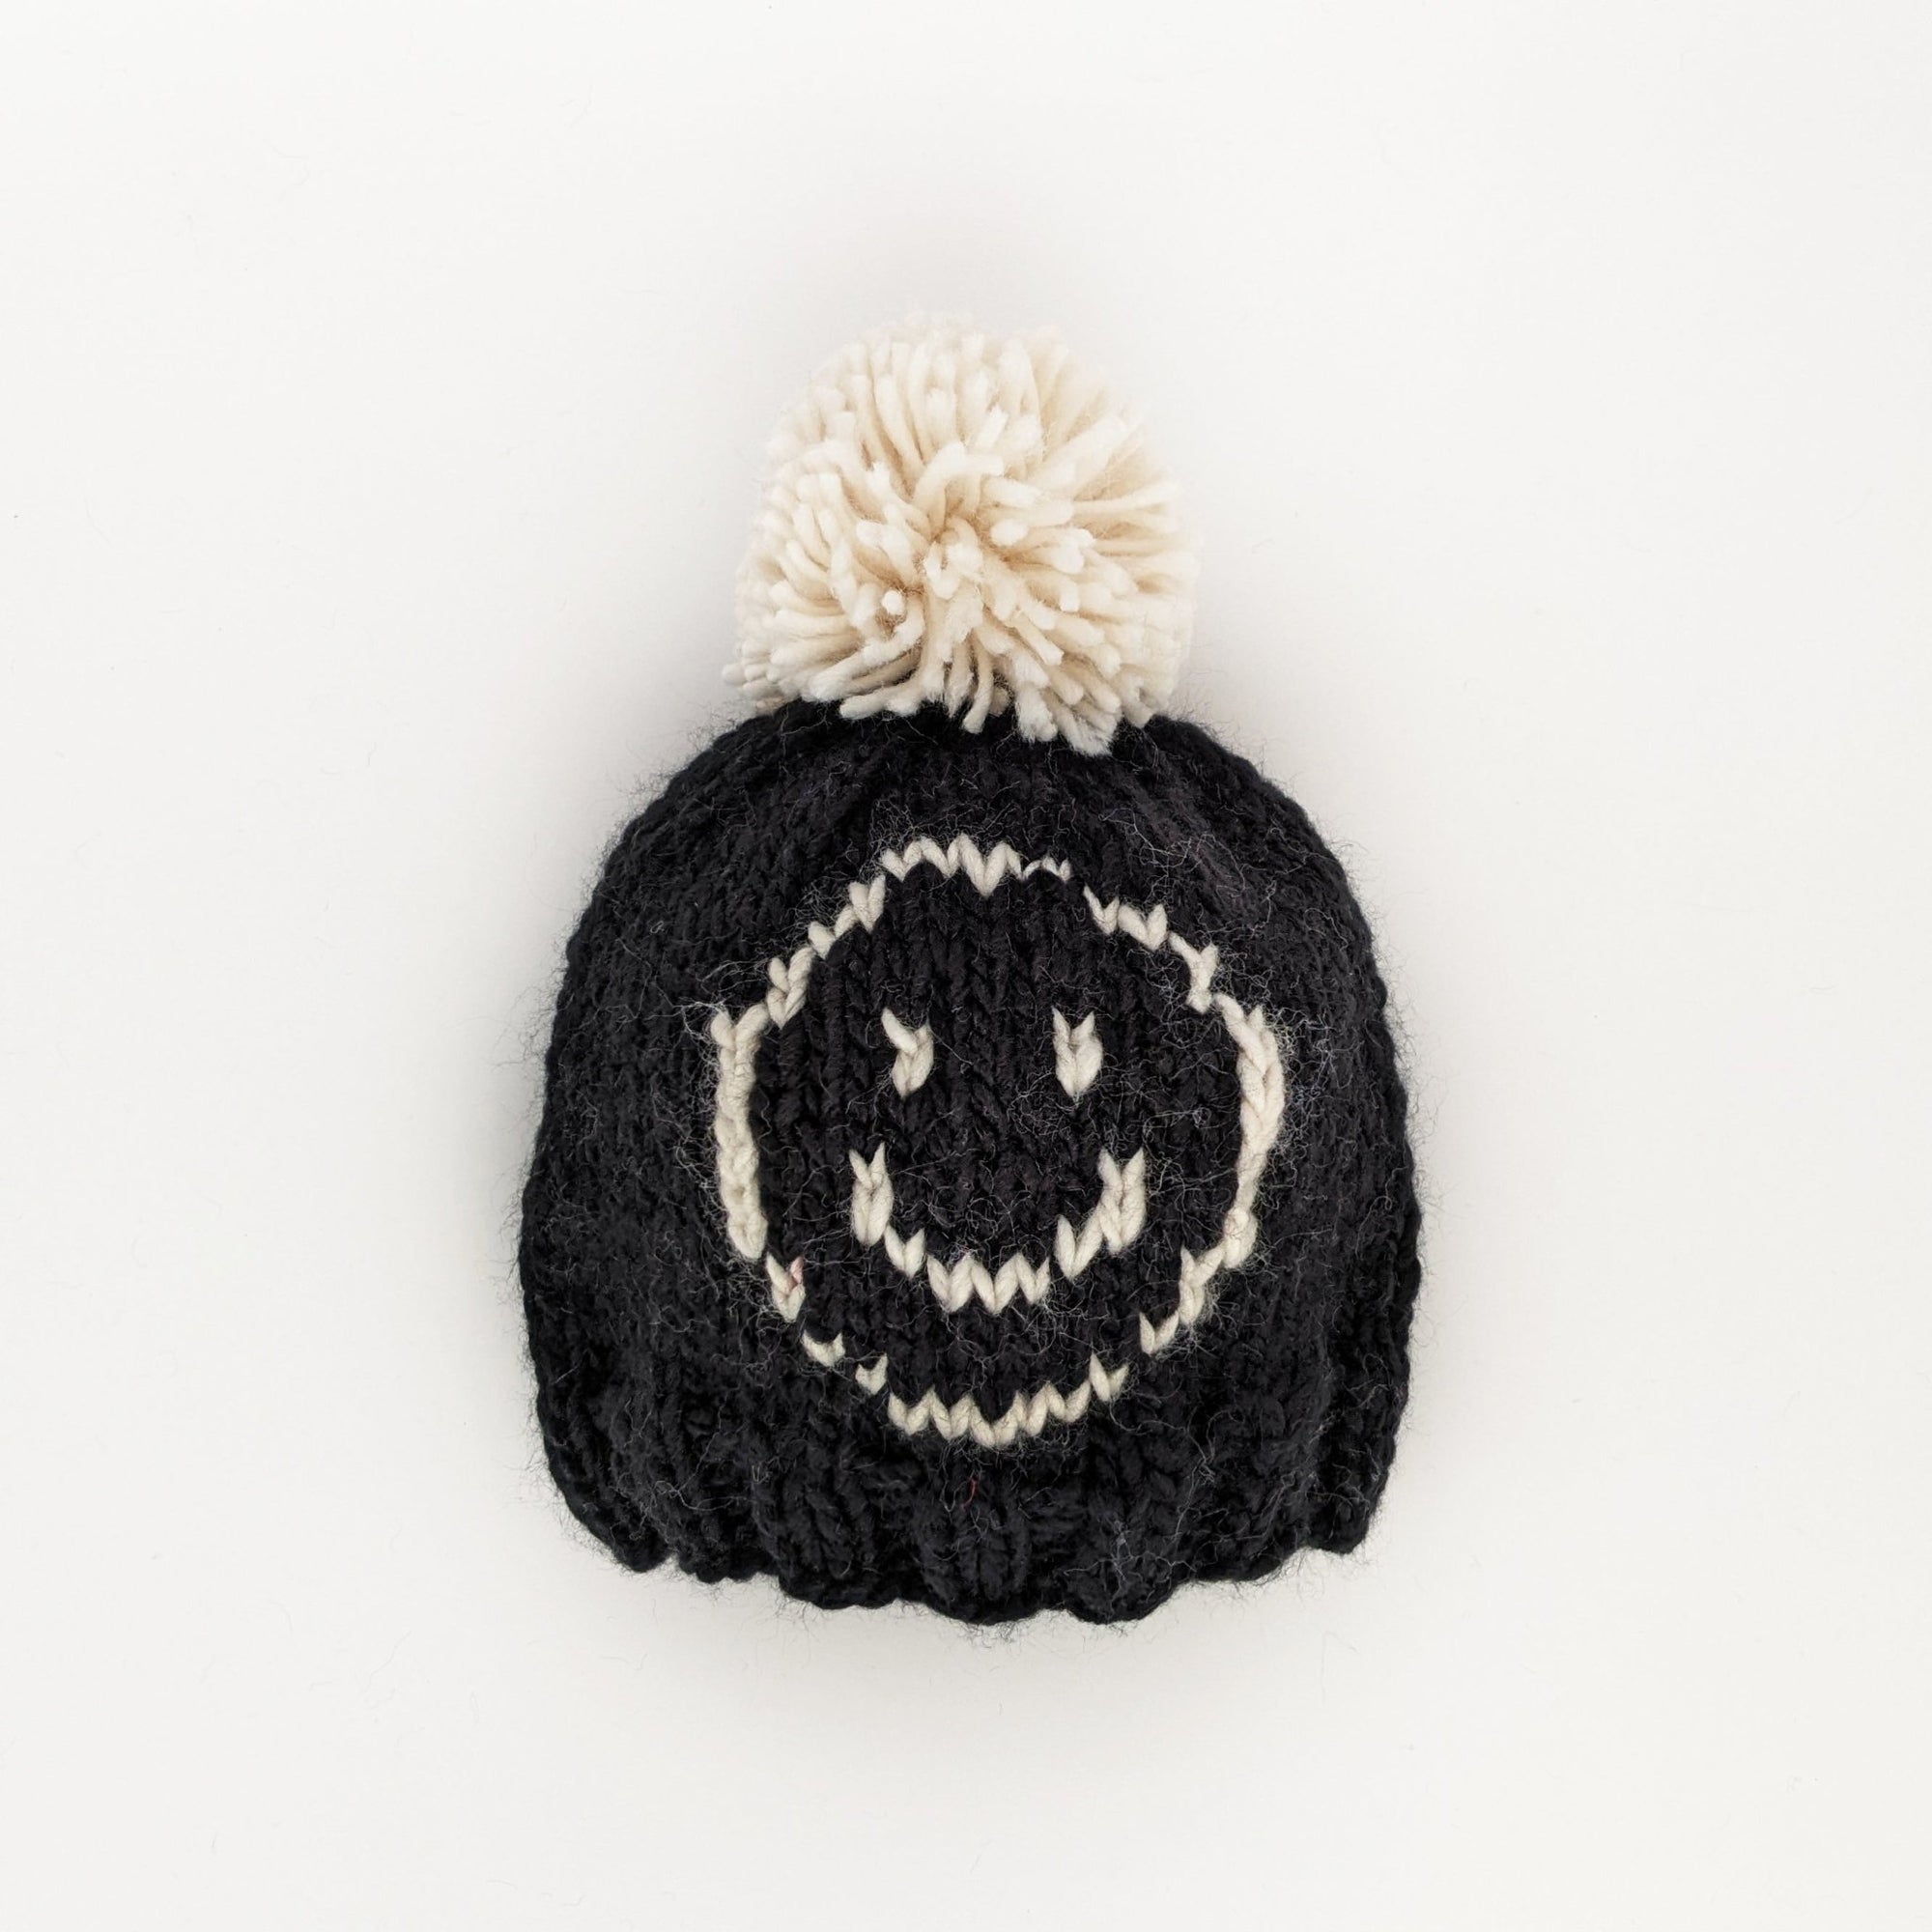 Smiley Beanie Hat due Jul/Aug - Beanie Hats